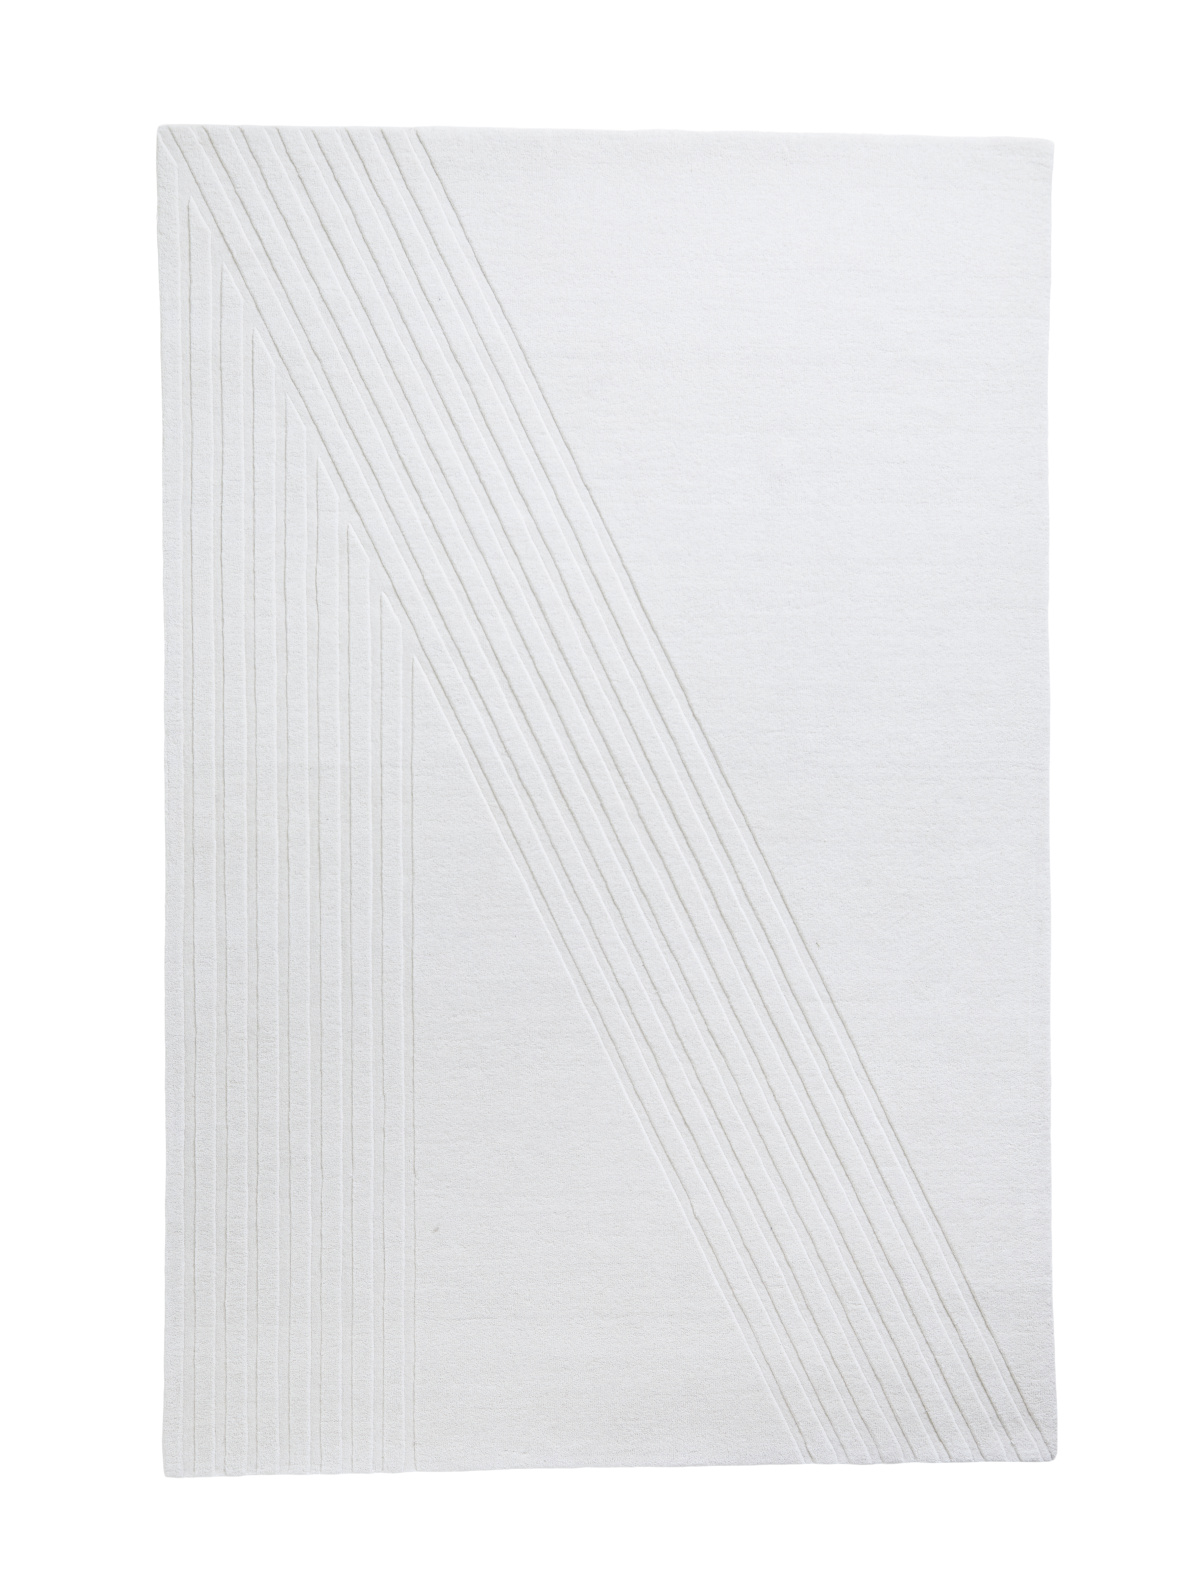 Kyoto Teppich, 200 x 300 cm, off white